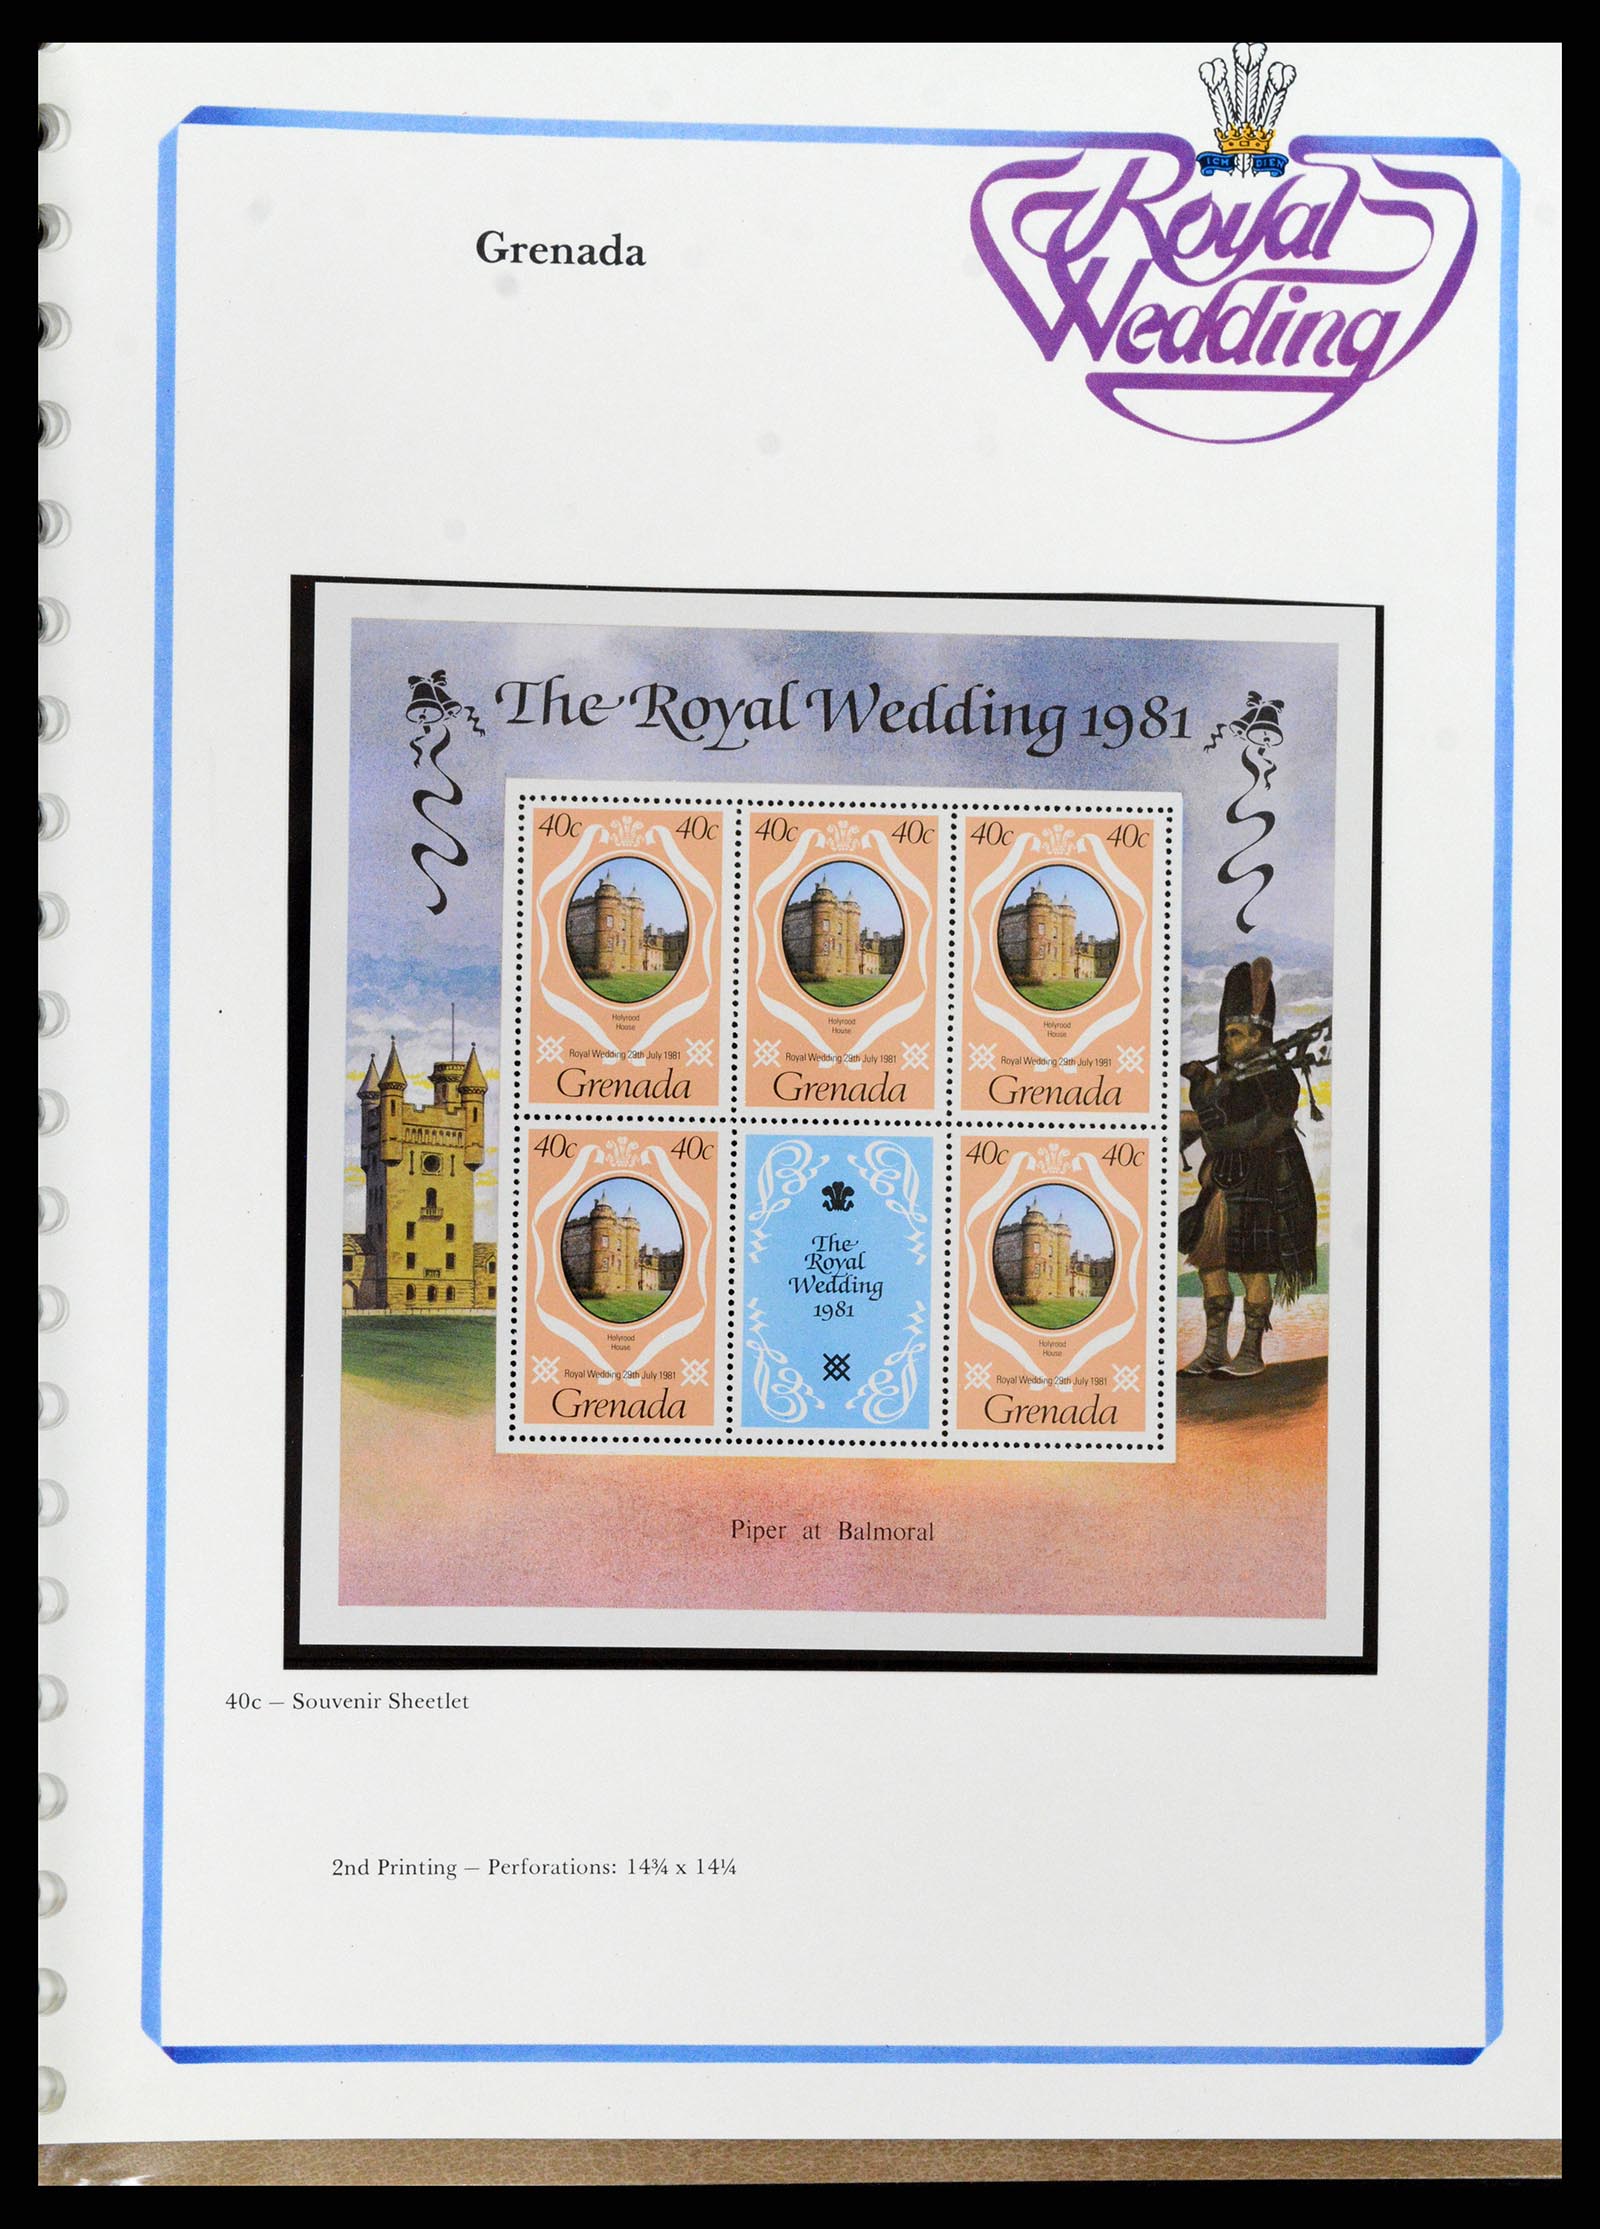 37818 064 - Stamp Collection 37818 Royal Wedding 1981.